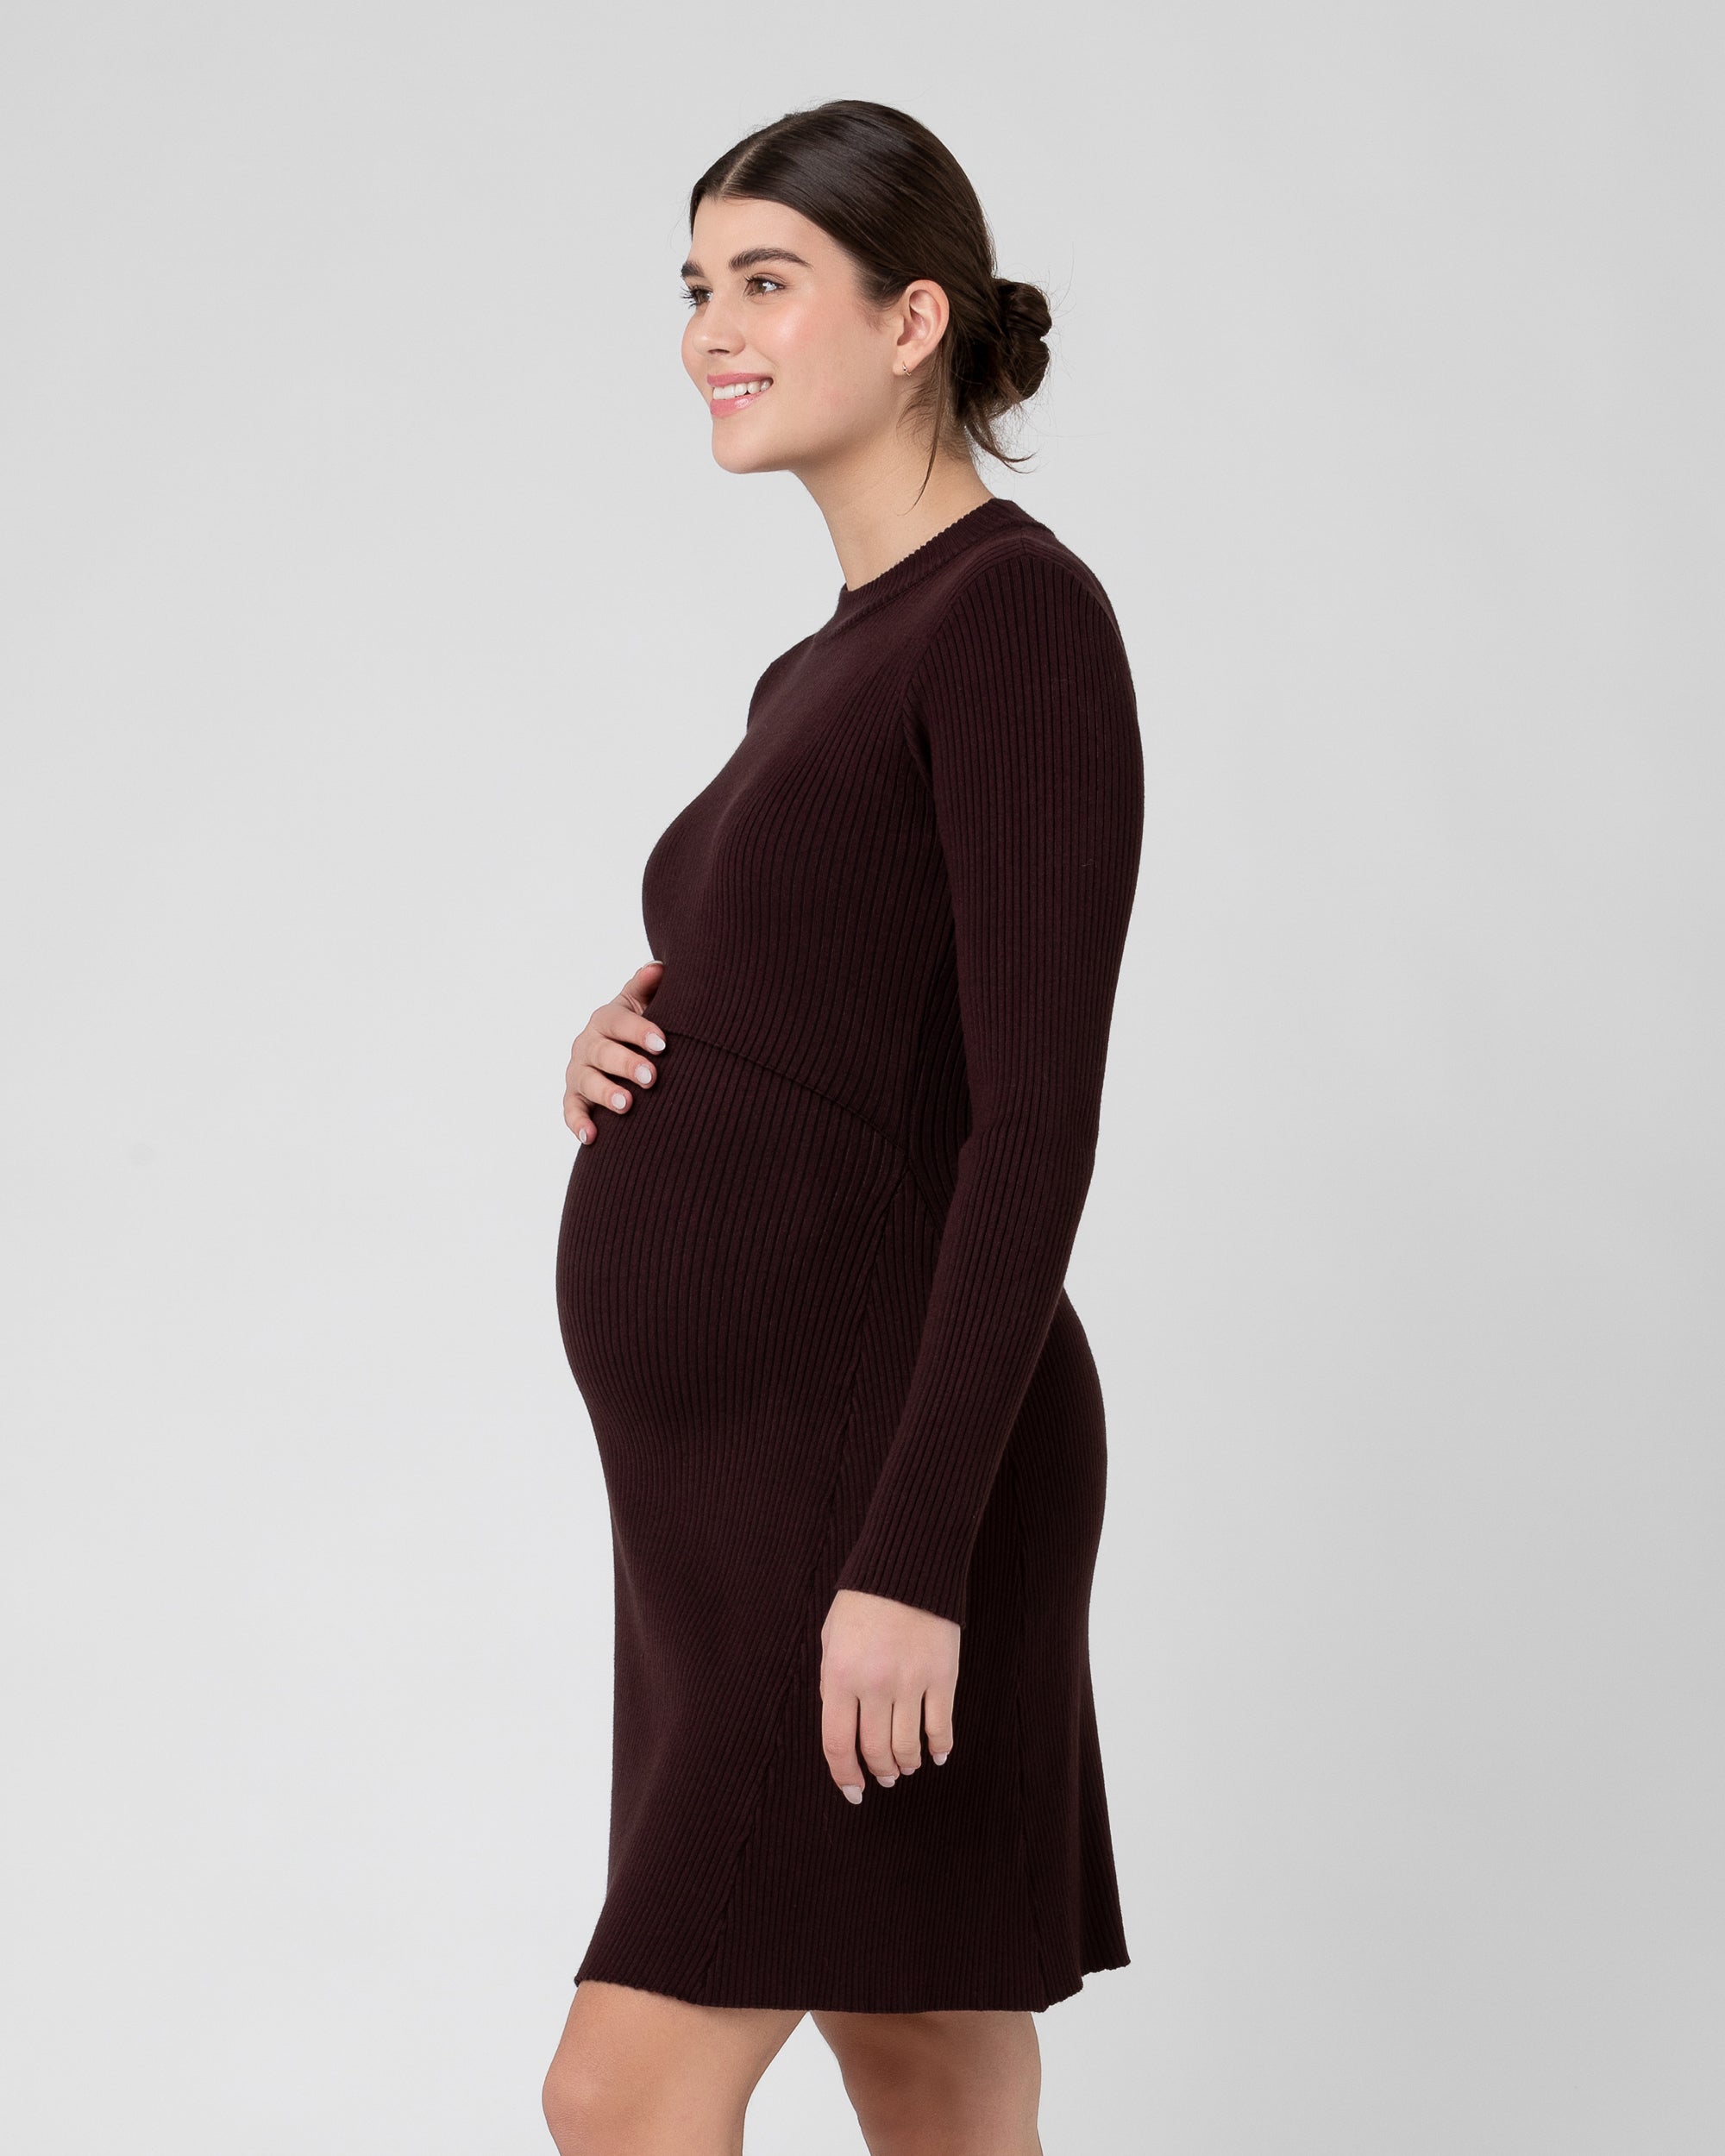 Ripe Maternity Dot Nursing Dress – BosomBabies